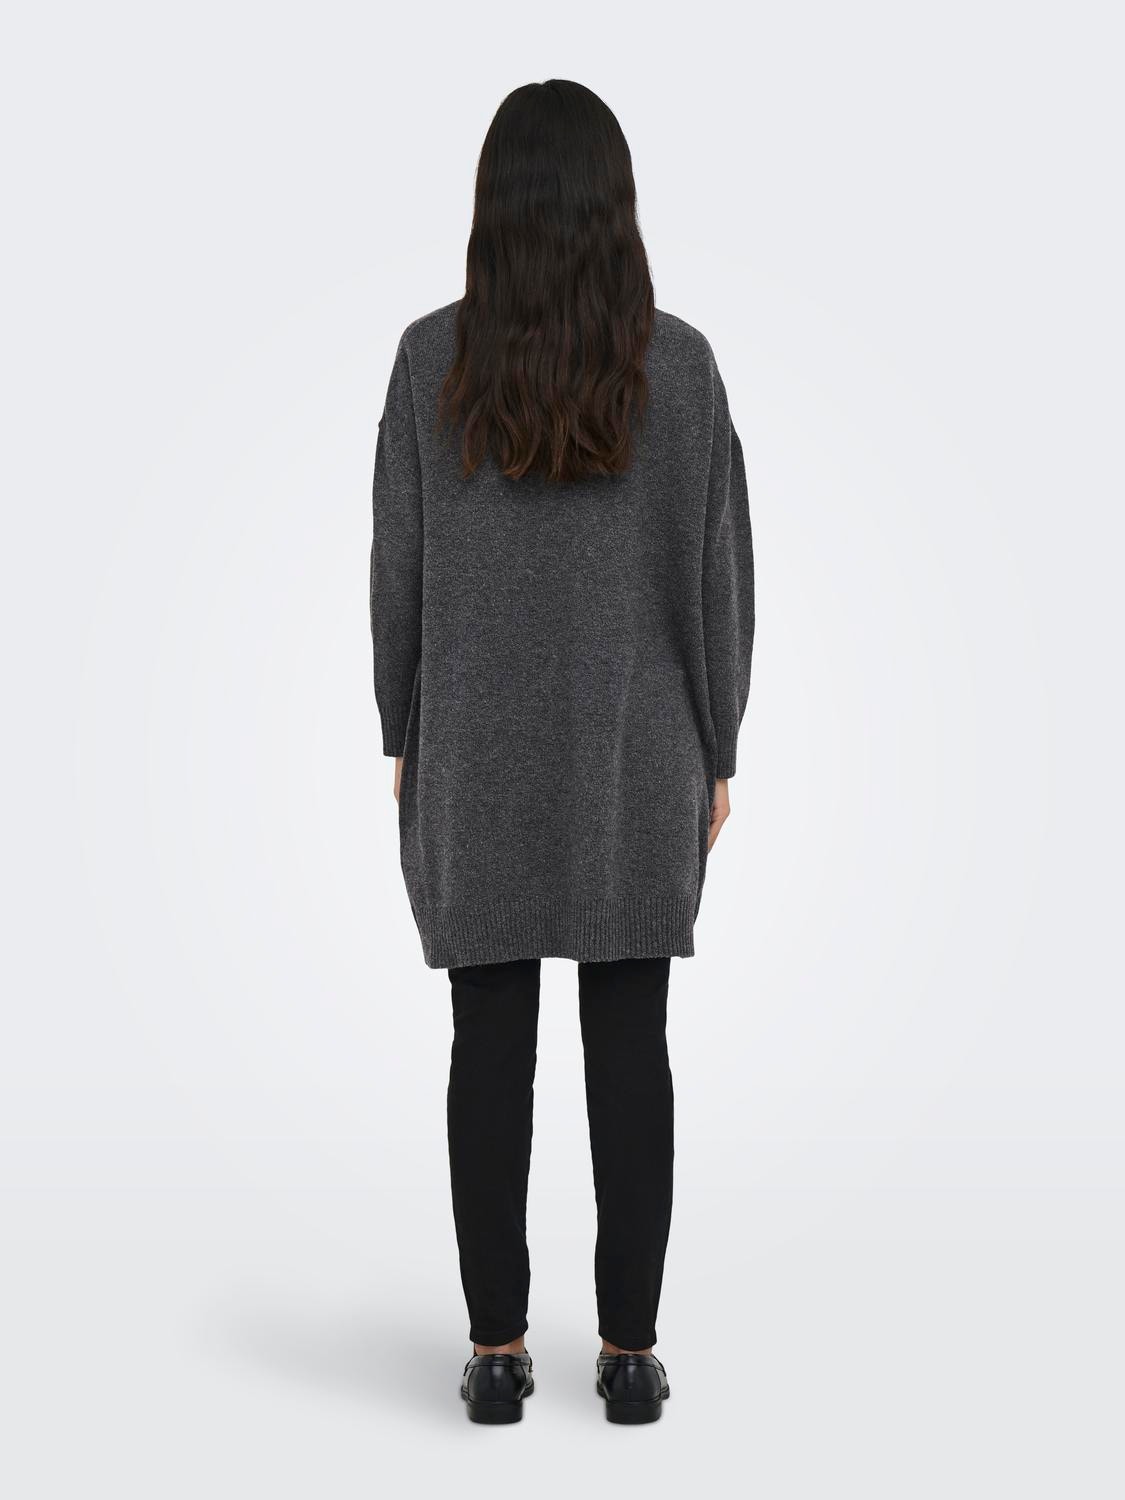 ONLY® knit | | Grey Long cardigan Dark